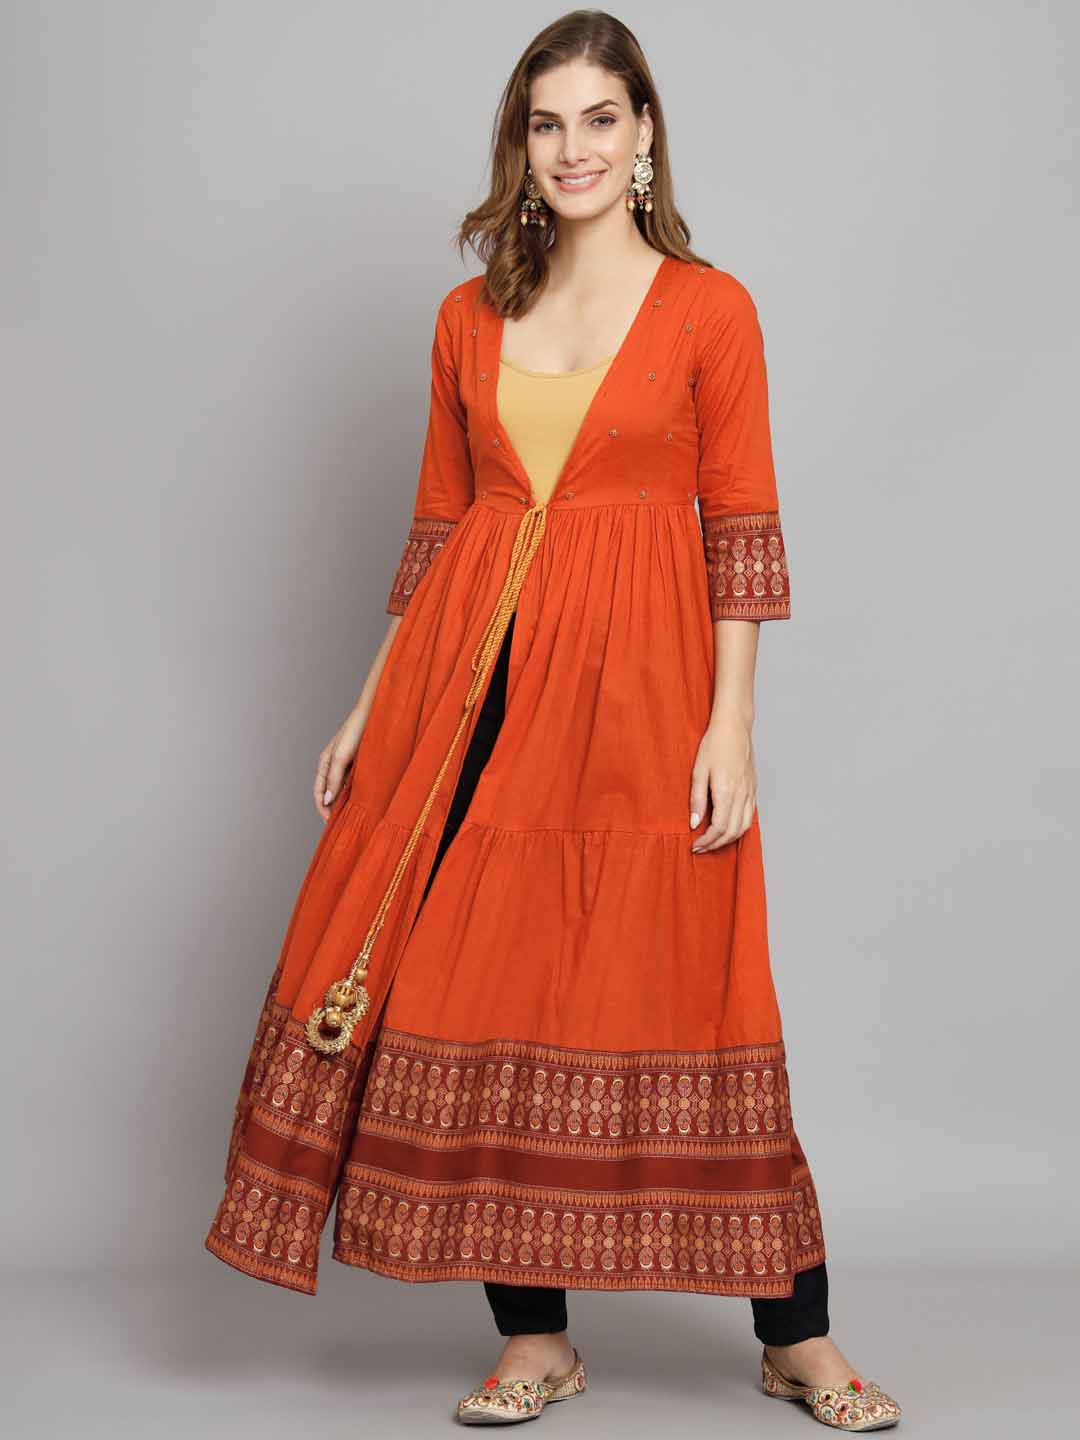 Women's Orange Cotton Anarkali Shrug